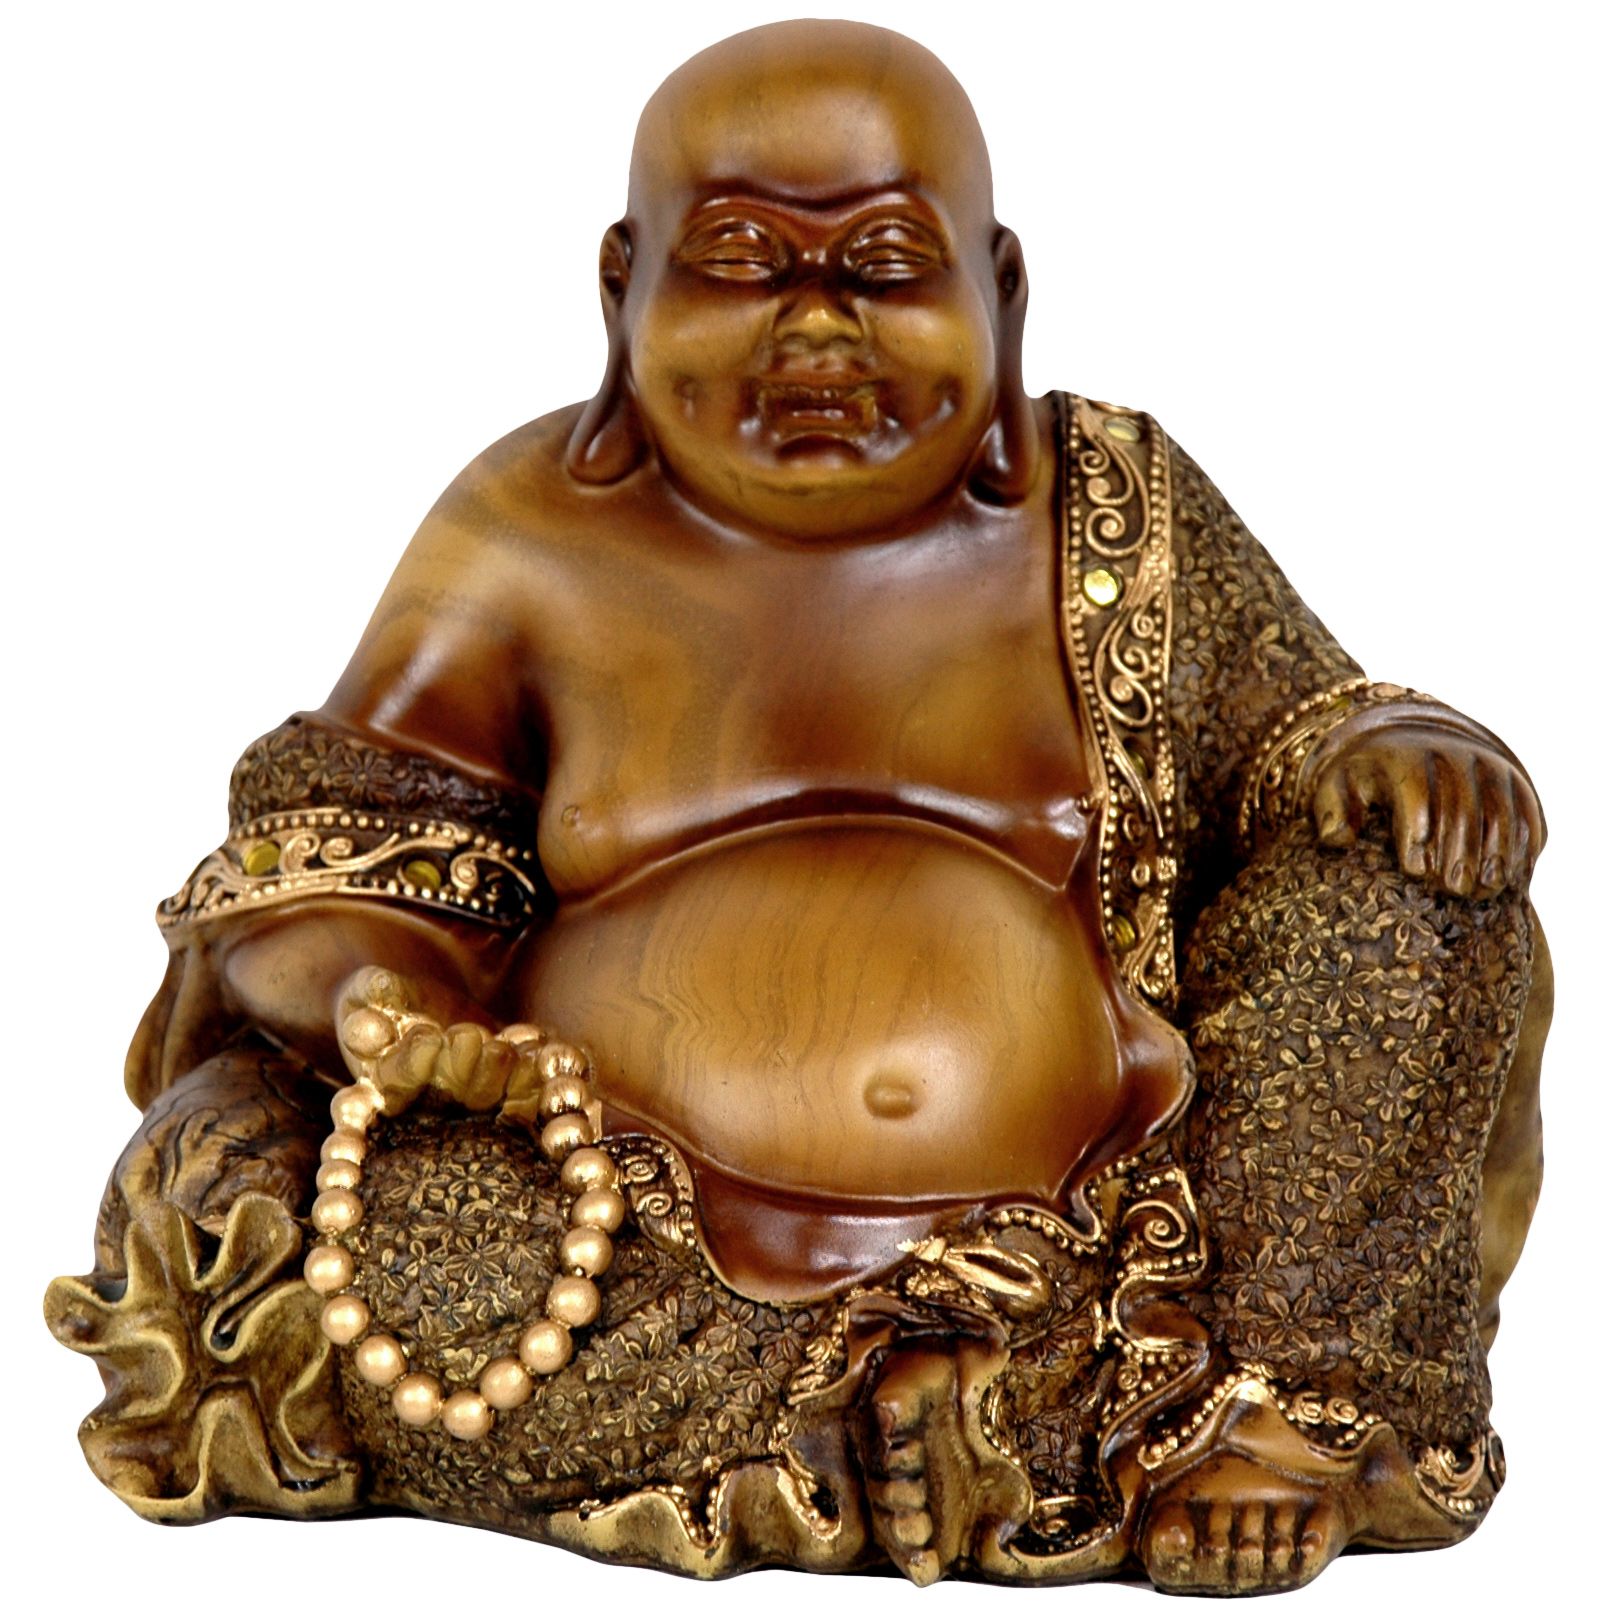 Buy 6" Sitting Laughing Buddha Statue Online (STABUD18) Satisfaction